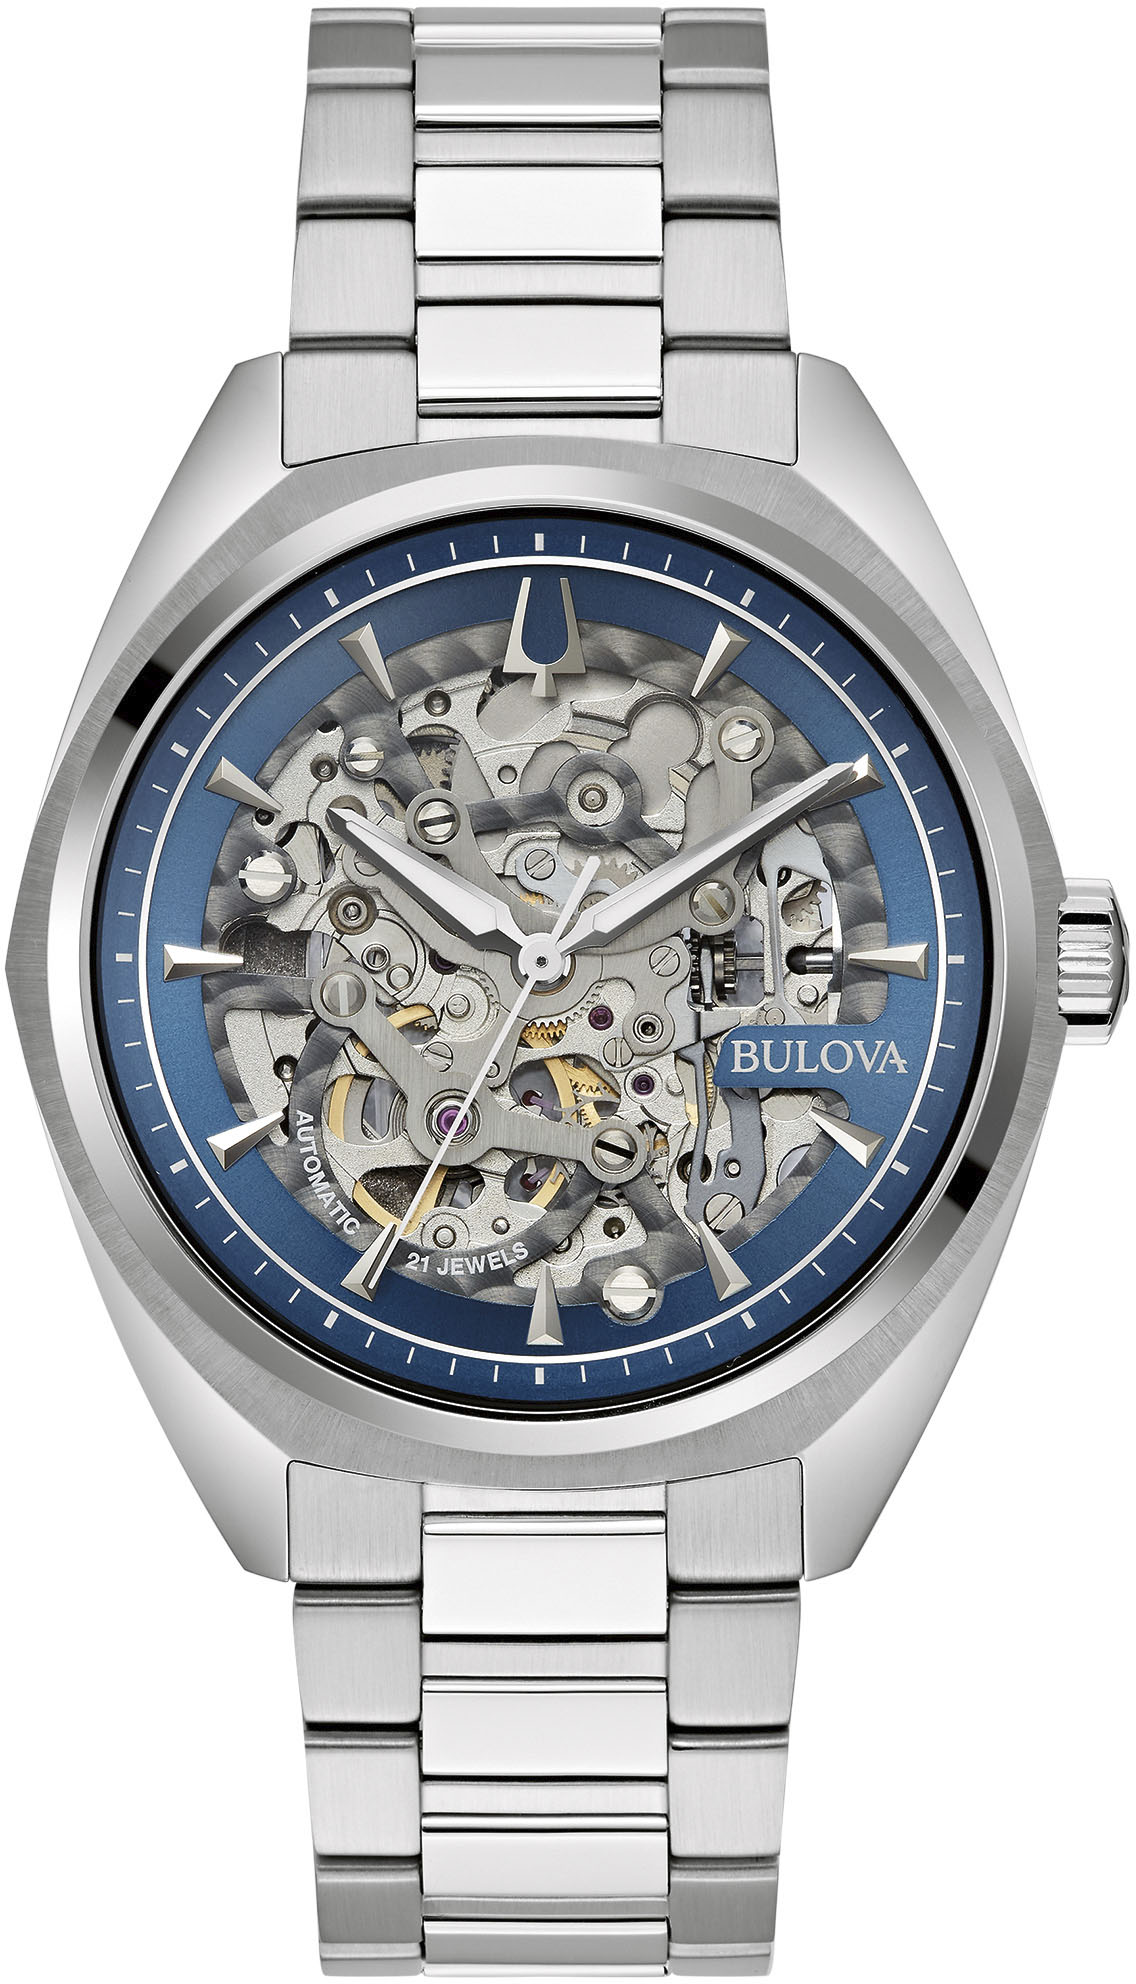 Bulova Mechanische Uhr »98A224« online bestellen | BAUR